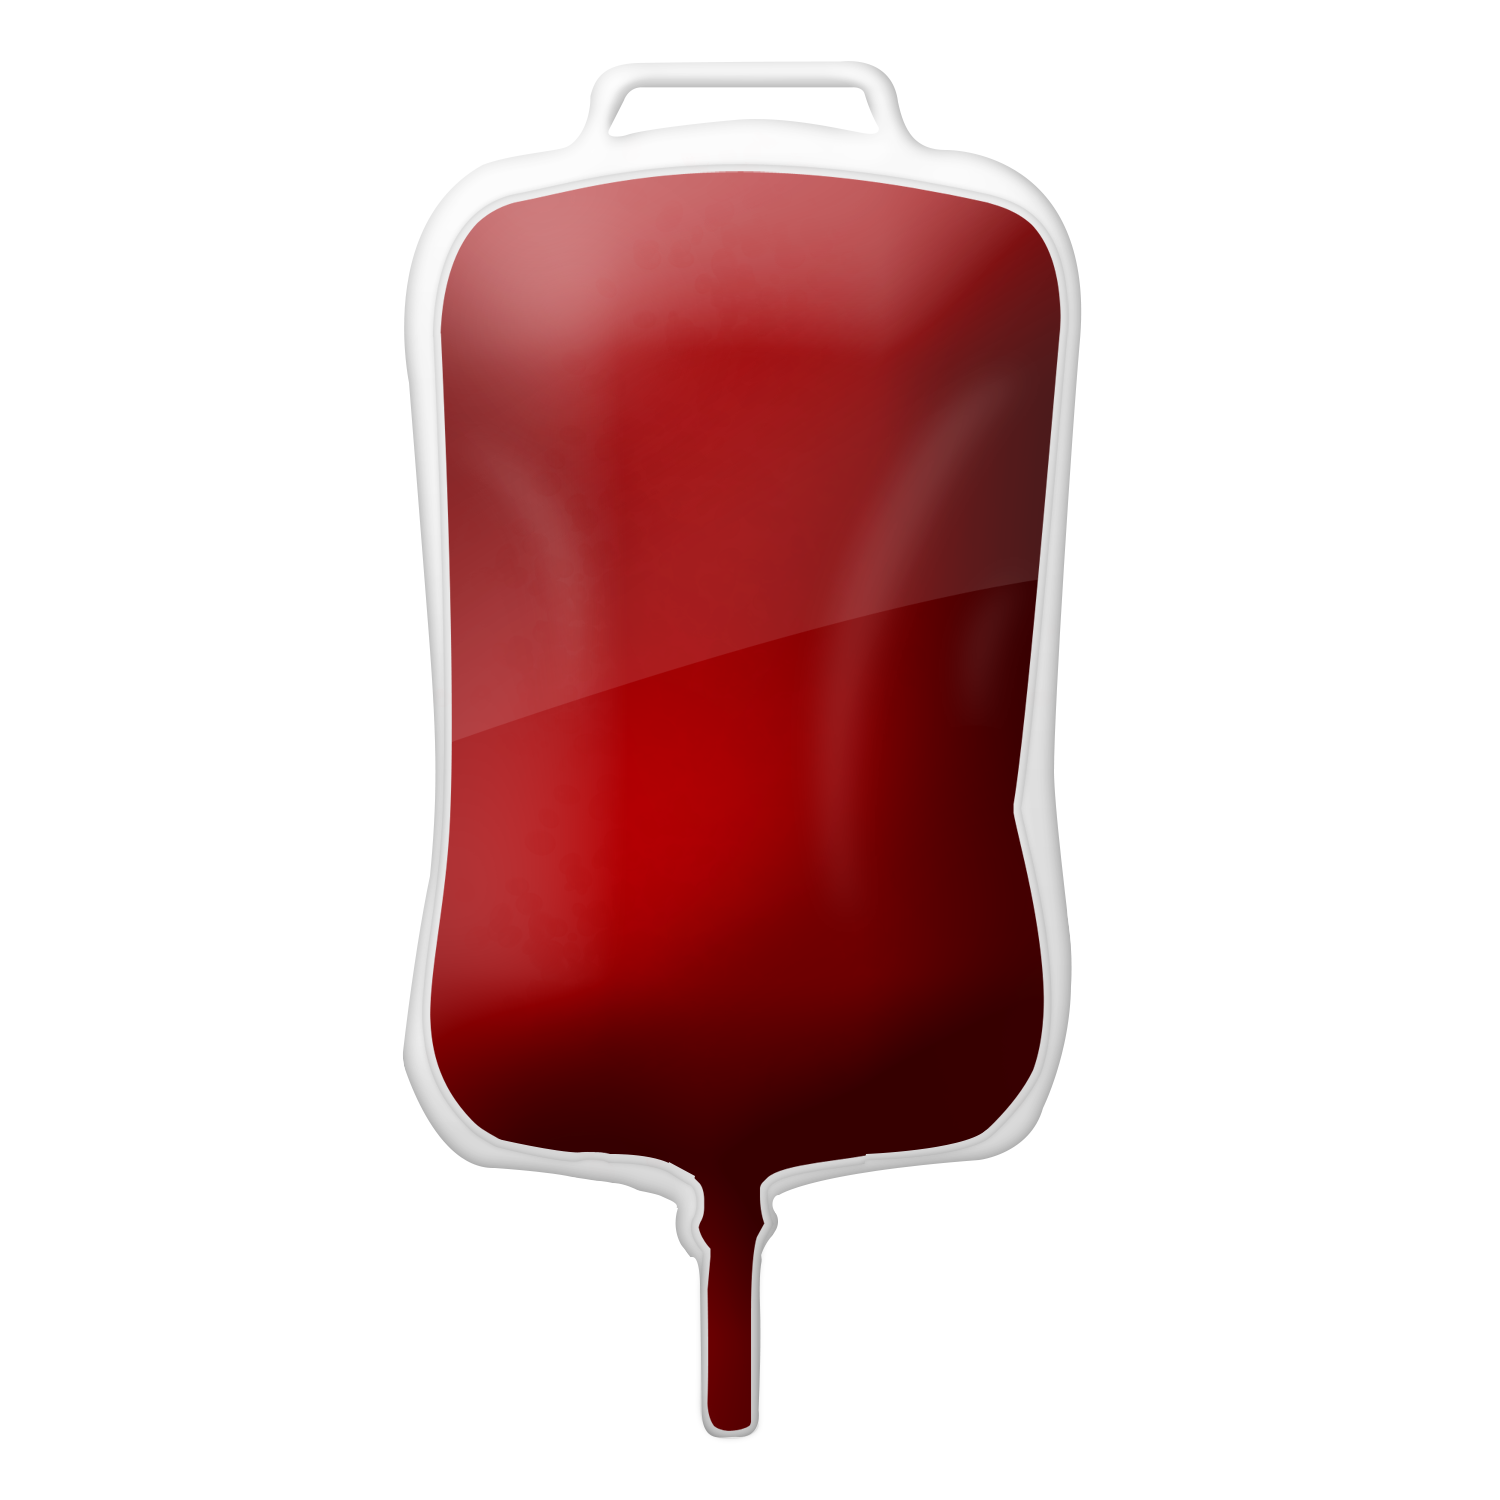 Blood Donation Bag PNG - 144777